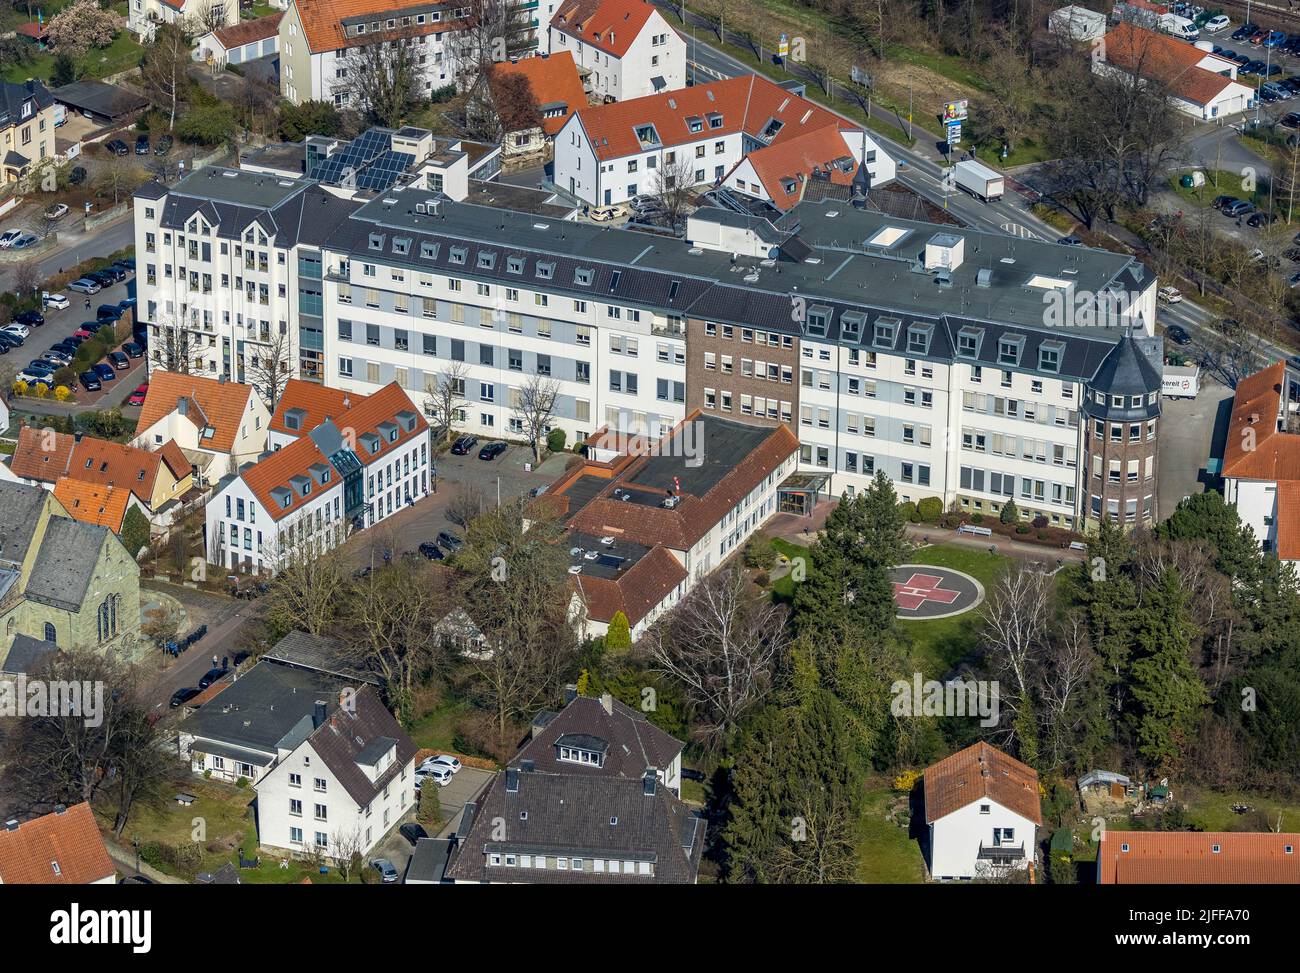 Aerial view, St. Mary's Hospital, Osthofen, Soest, Soester Börde, North Rhine-Westphalia, Germany, DE, Europe, health care, hospital, heliport, clinic Stock Photo